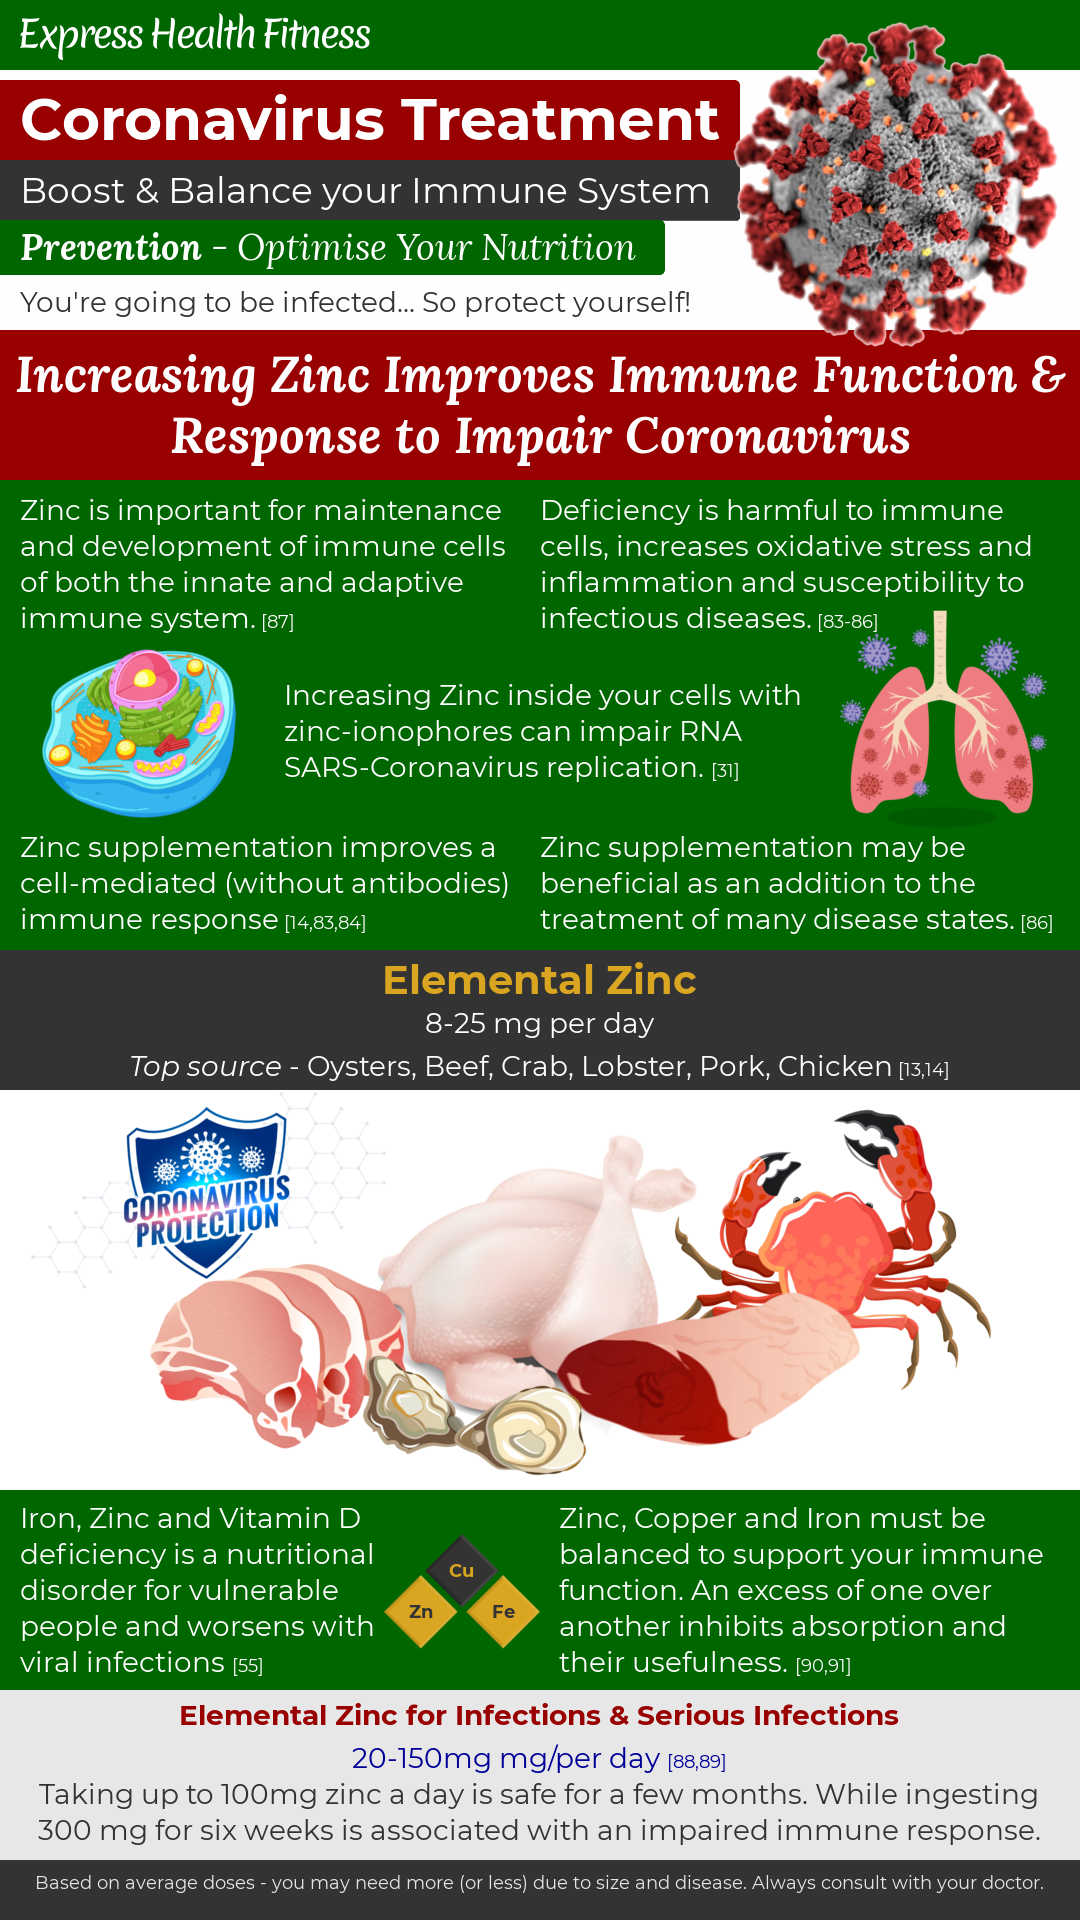 Coronavirus Treatment - Nutrition & Supplements - Prevention - Zinc